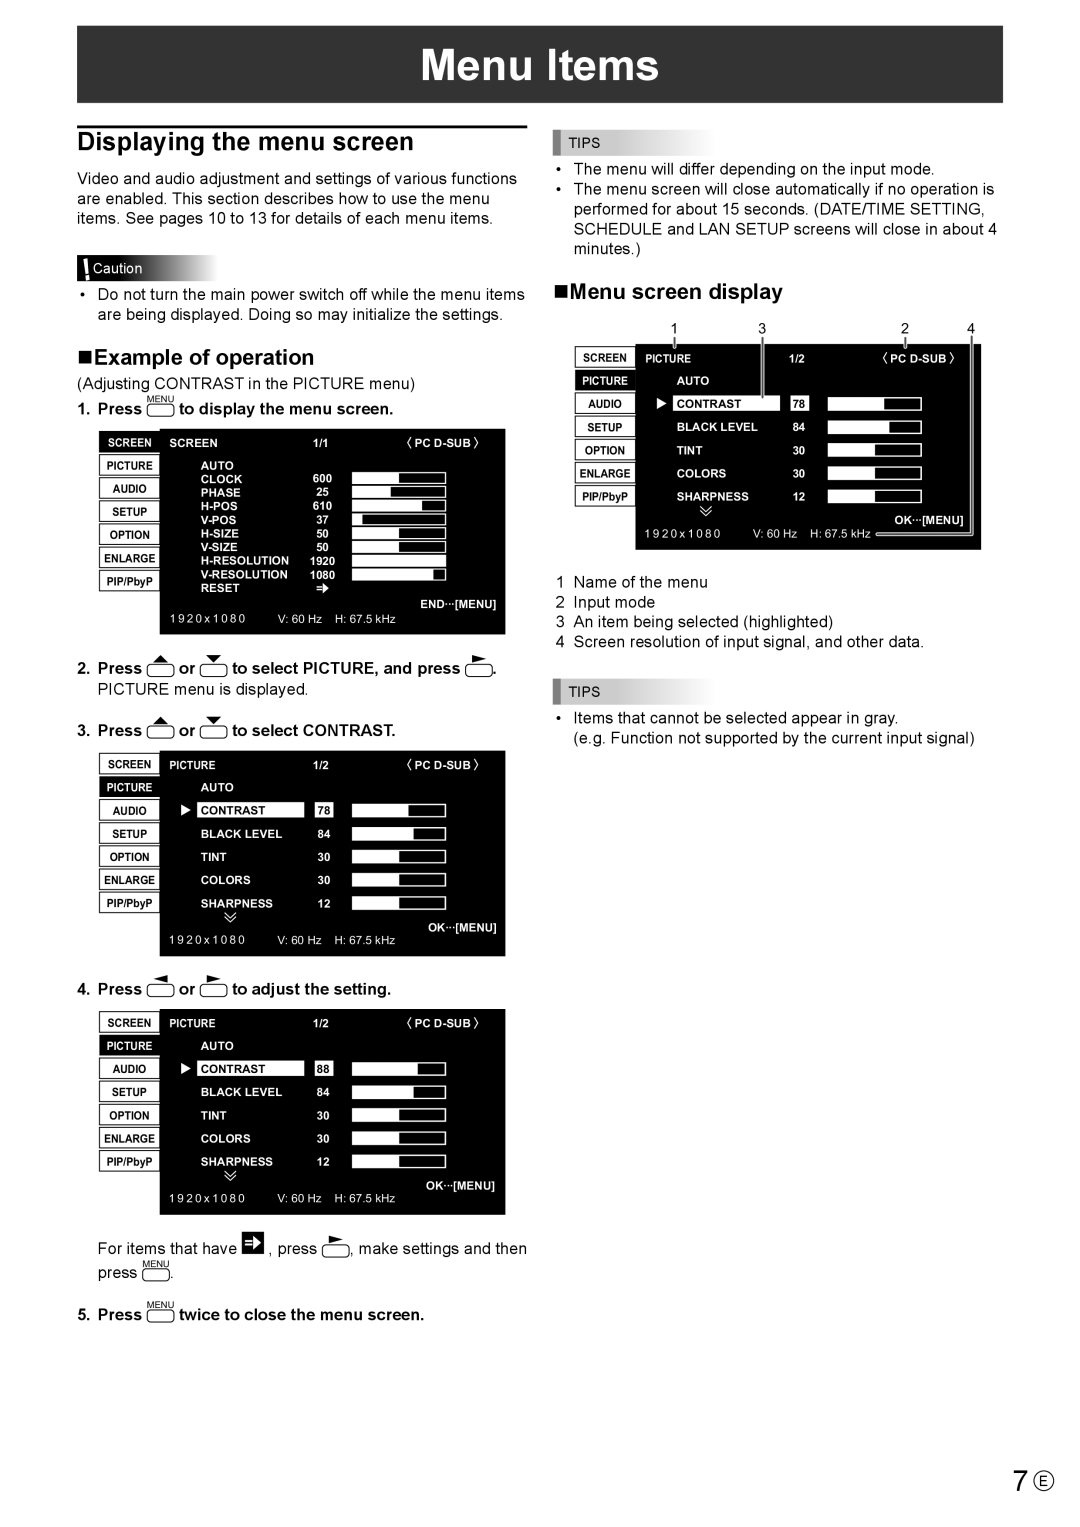 Sharp PN-E521, PN-E601 manual Menu Items, Displaying the menu screen, nExample of operation, nMenu screen display 